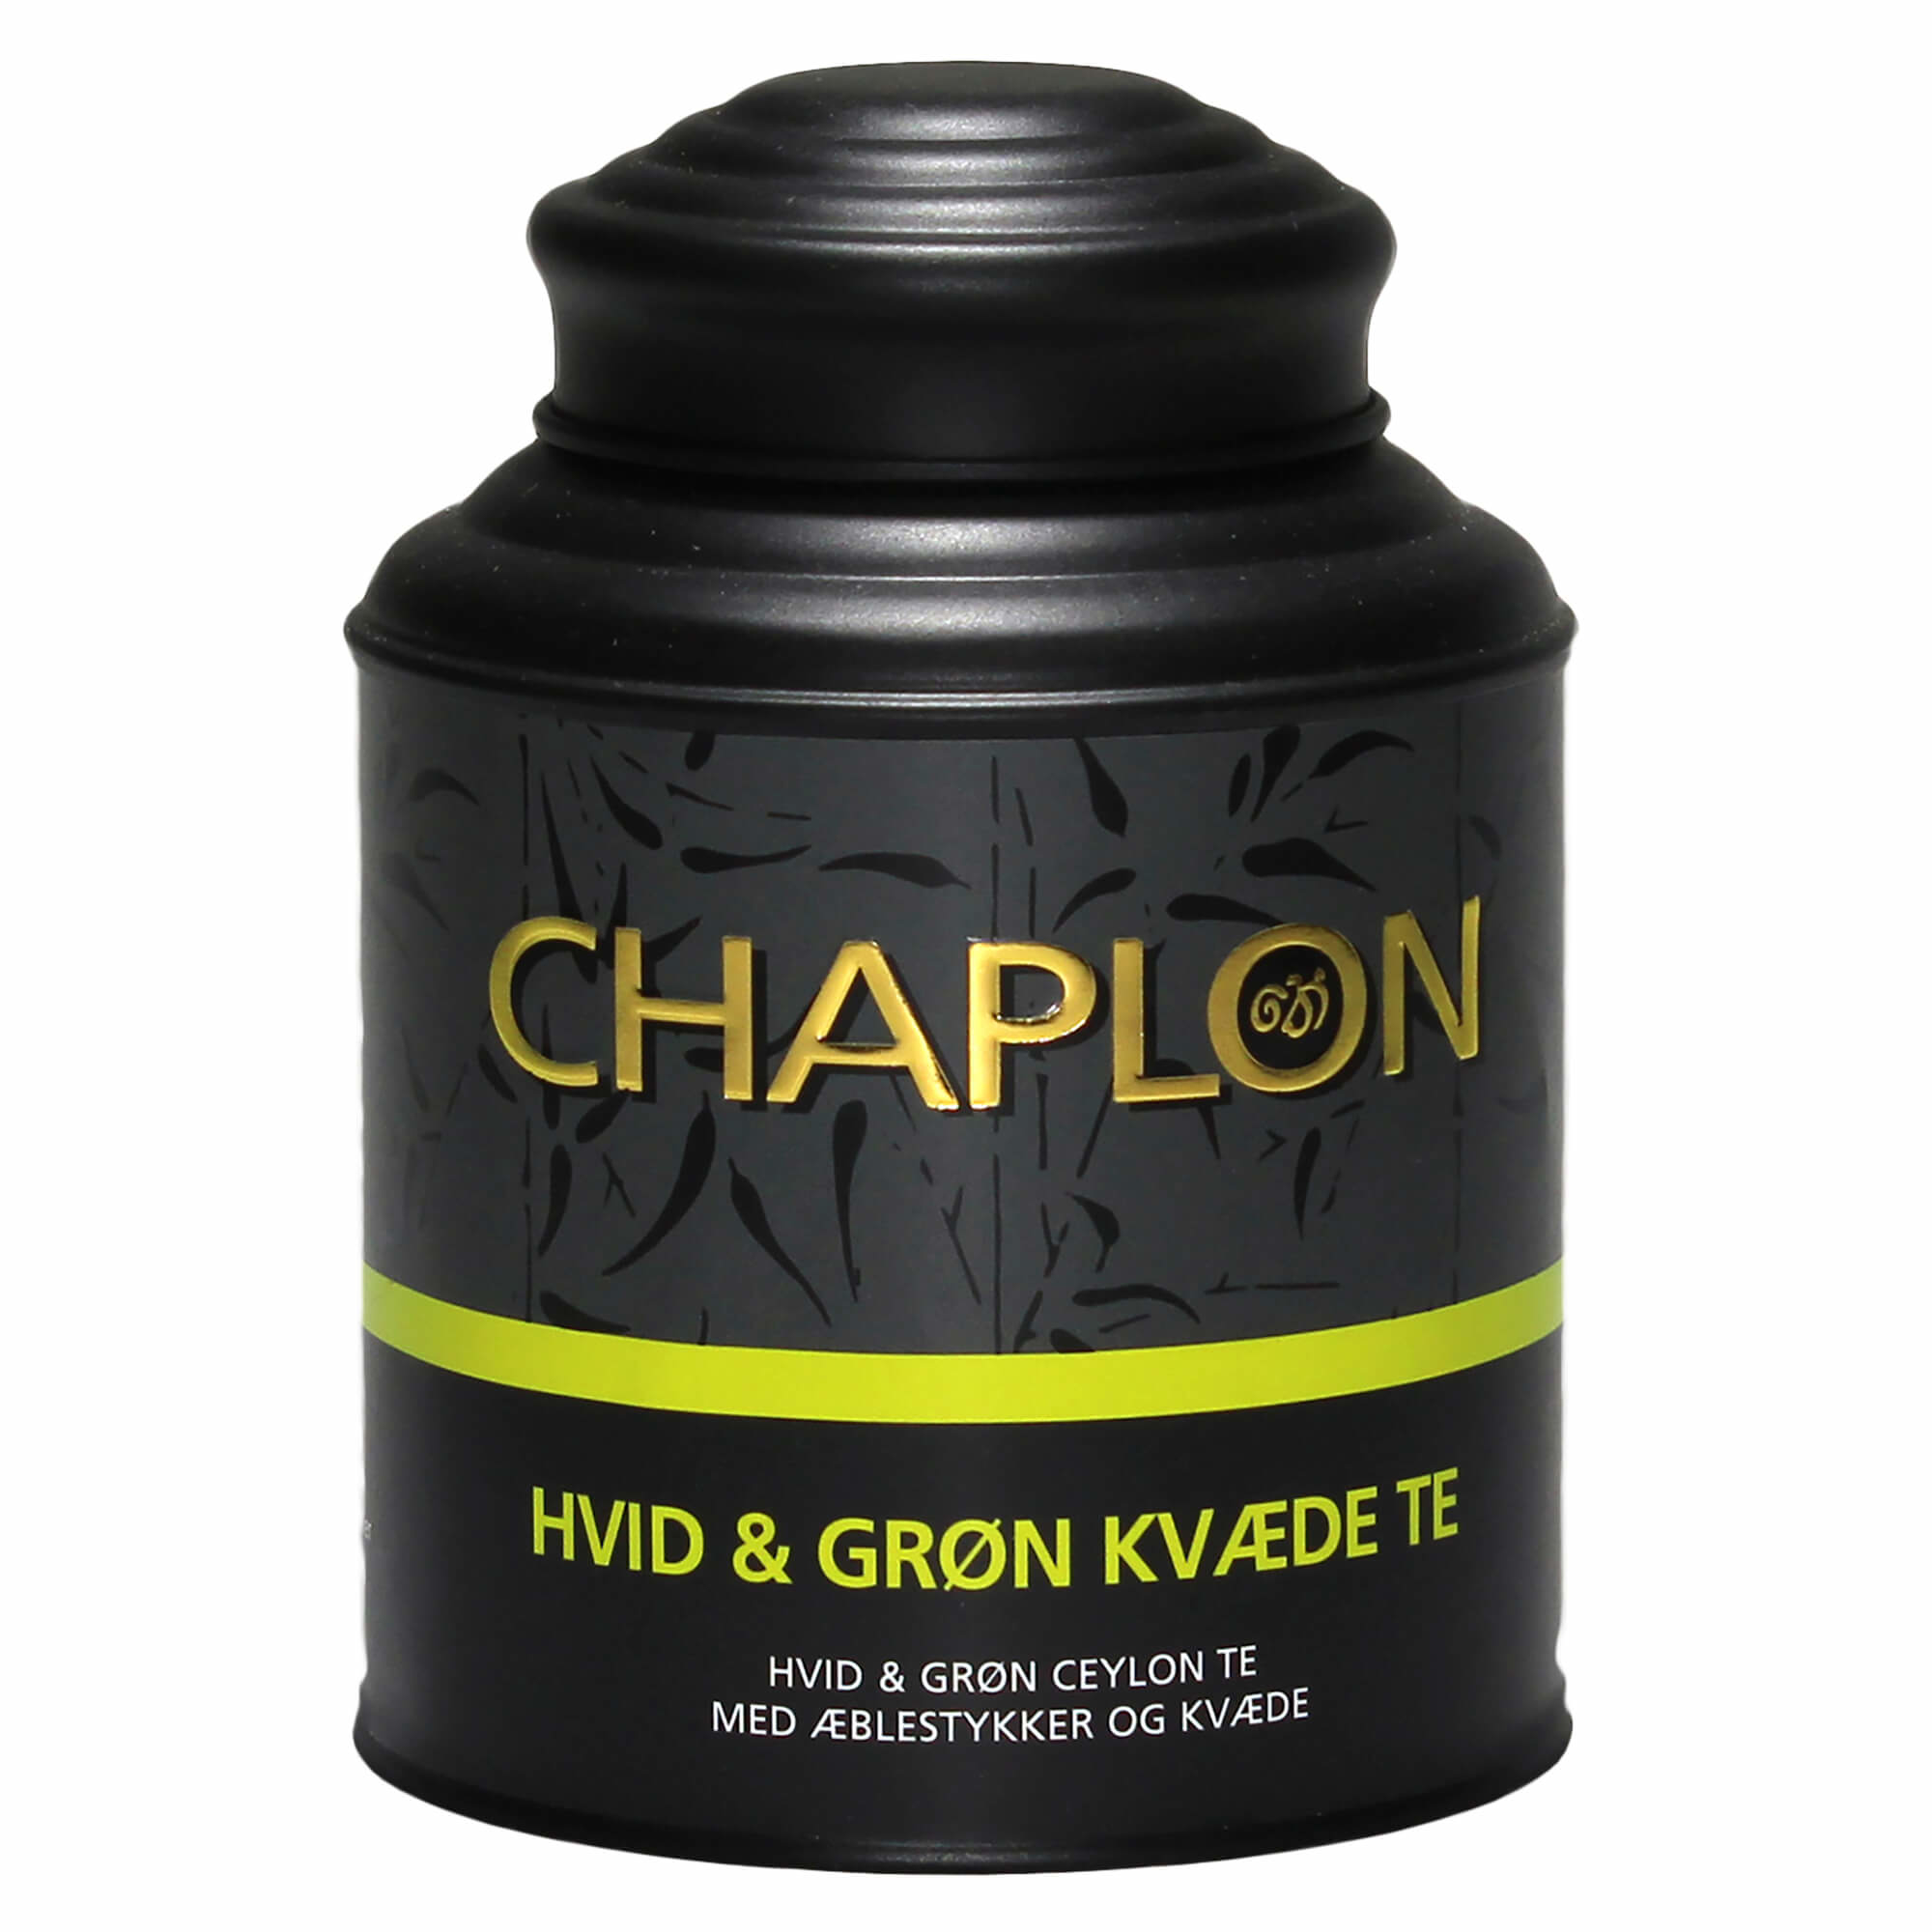 Chaplon Hvid & Grøn Kvæde Te, 160 gram dåse thumbnail